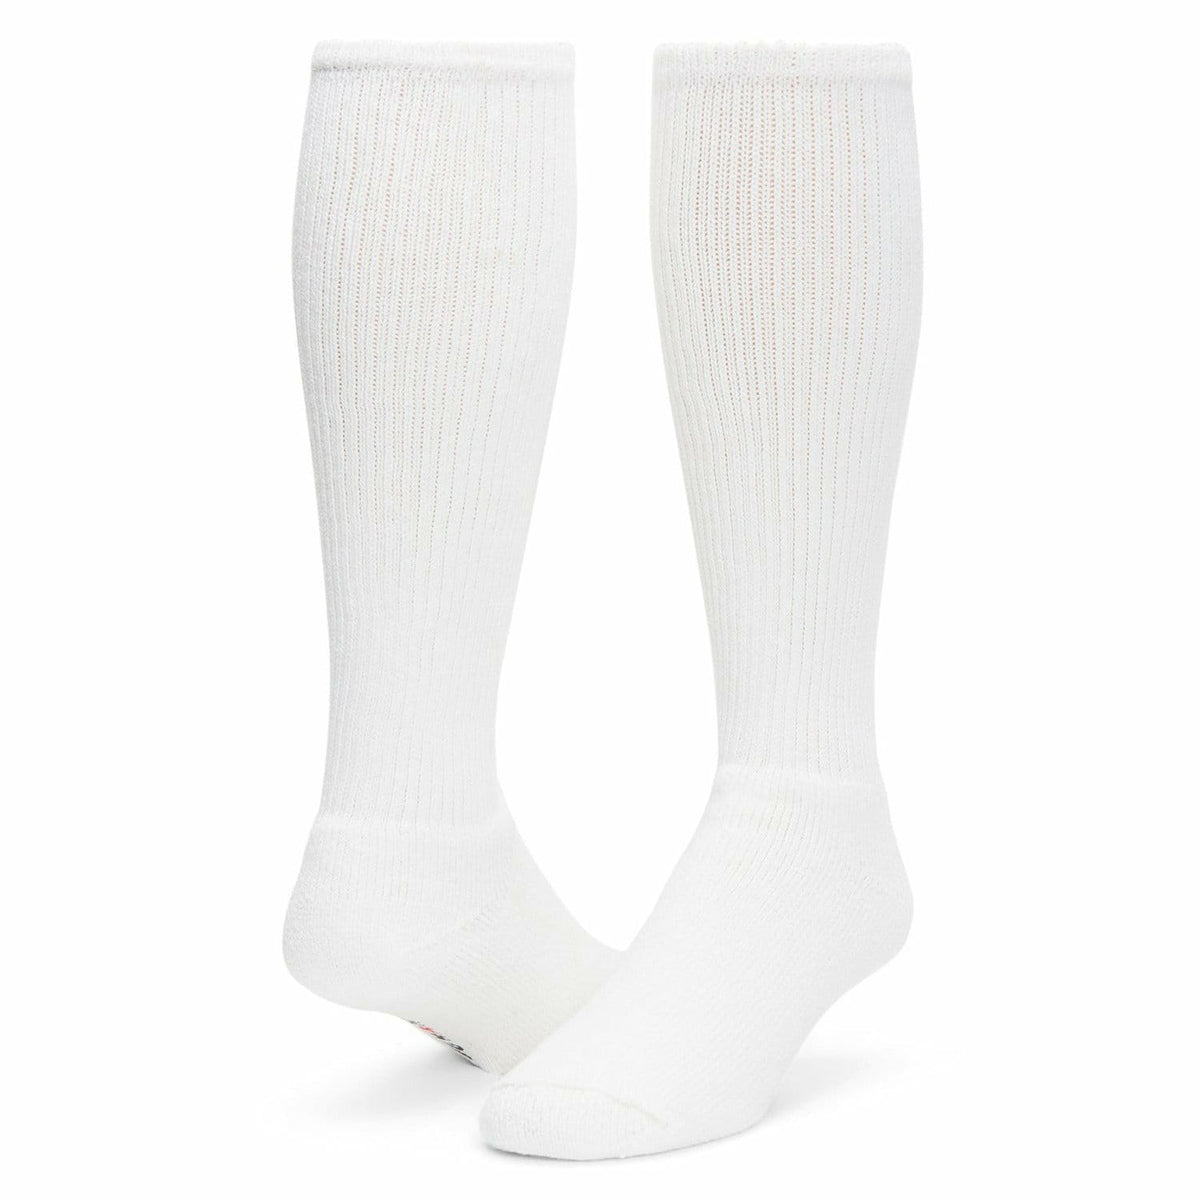 Wigwam King Cotton High Socks - GoBros.com